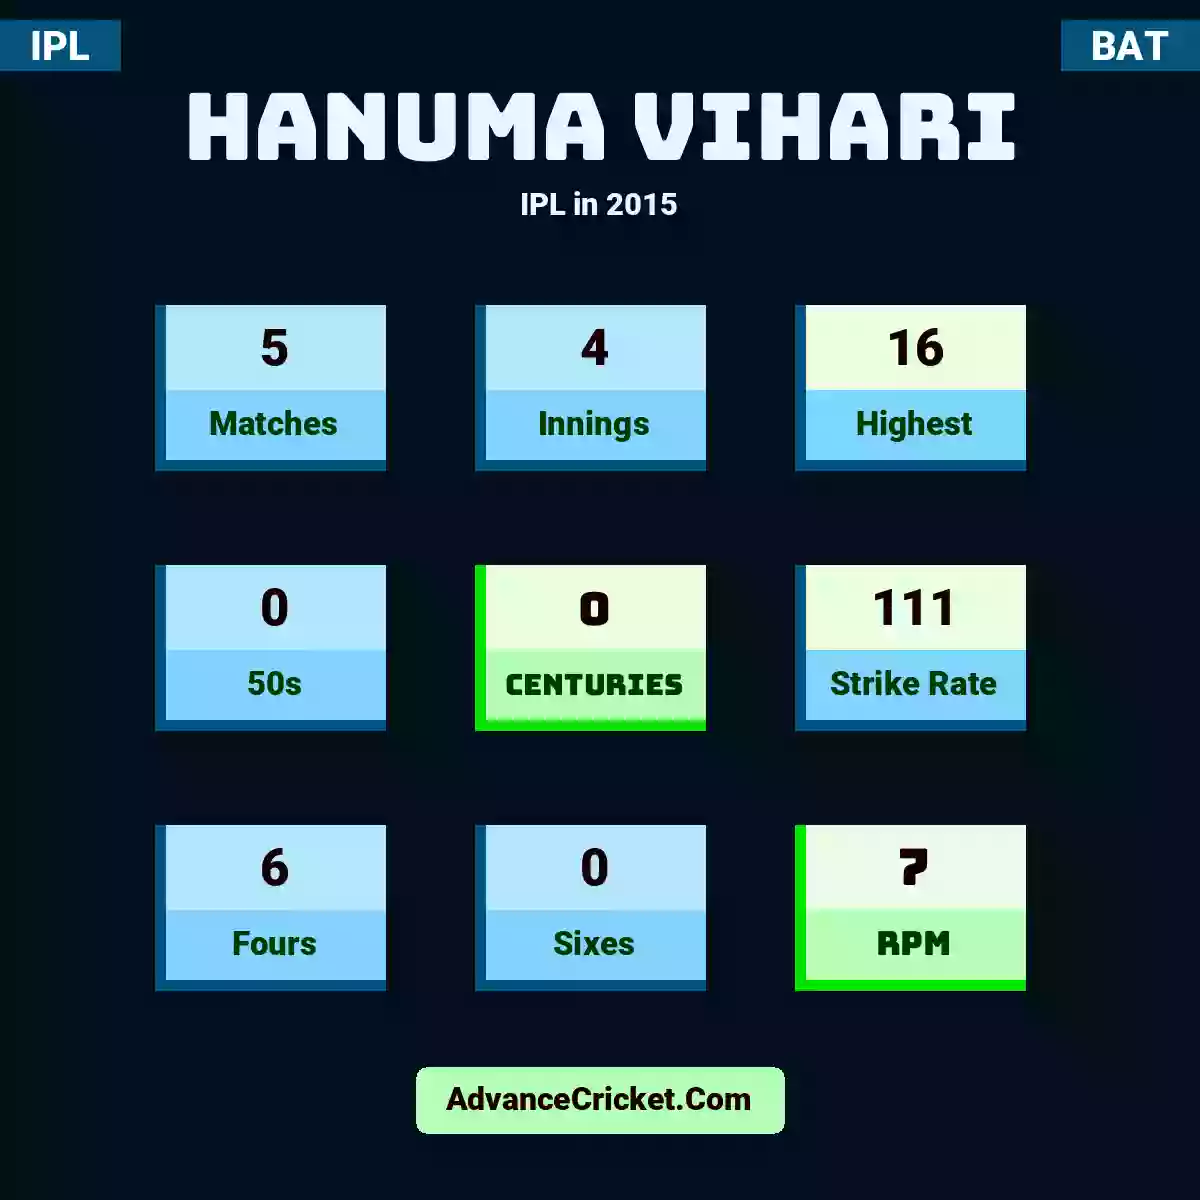 Hanuma Vihari IPL  in 2015, Hanuma Vihari played 5 matches, scored 16 runs as highest, 0 half-centuries, and 0 centuries, with a strike rate of 111. H.Vihari hit 6 fours and 0 sixes, with an RPM of 7.